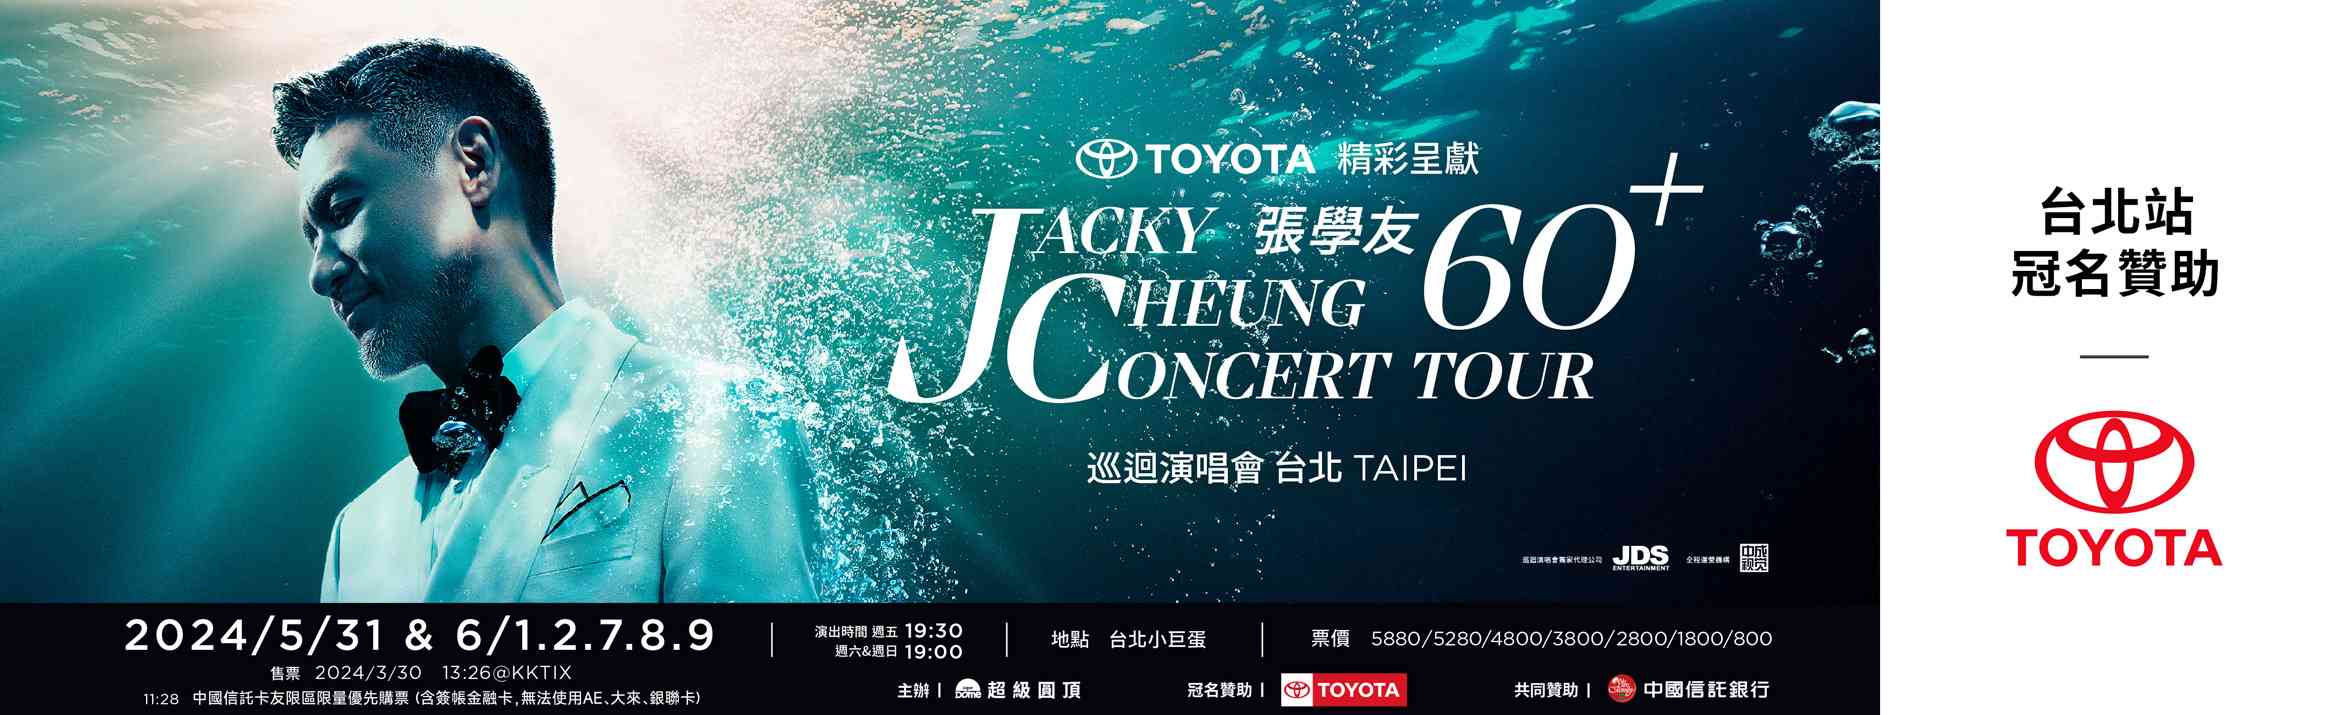 TOYOTA冠名贊助《張學友60+巡迴演唱會》邀你一同見證華語歌壇經典傳奇